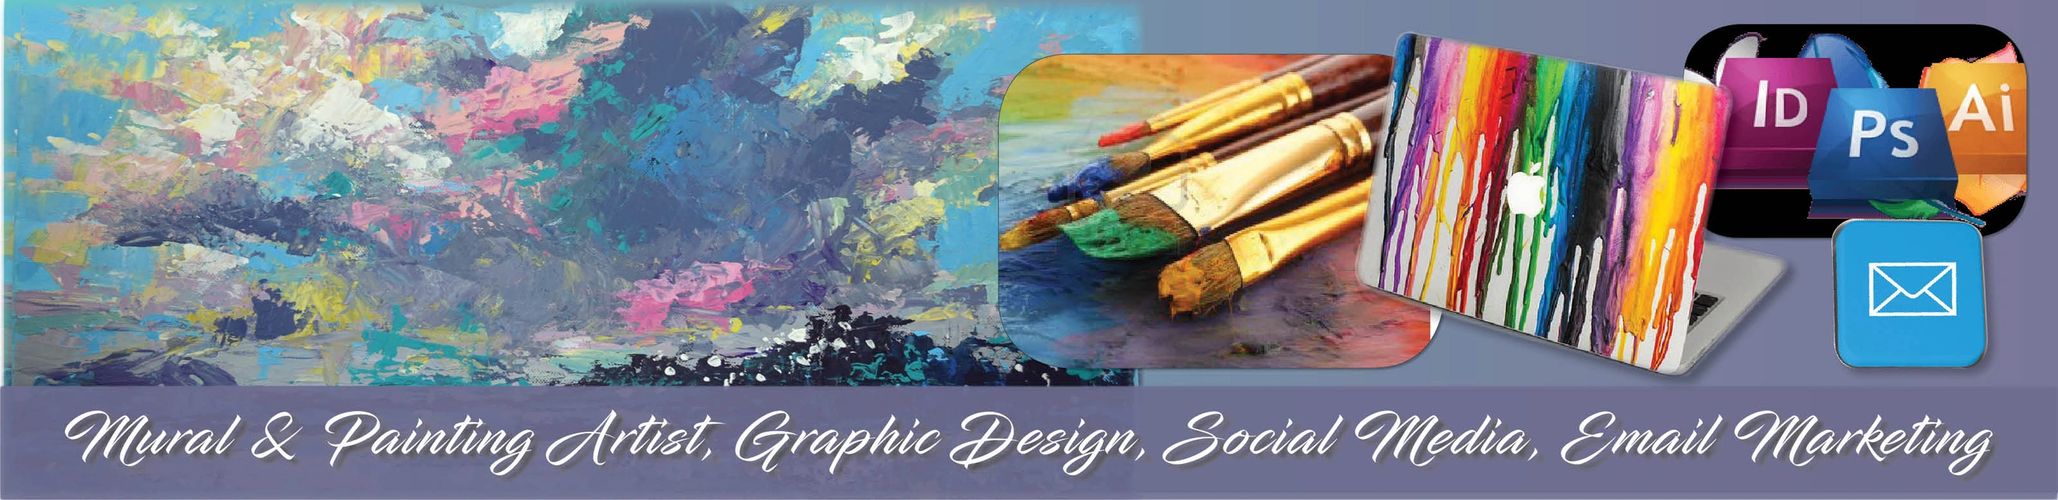 Jill Roberts Graphic Designer, social media, email marketing artist banner